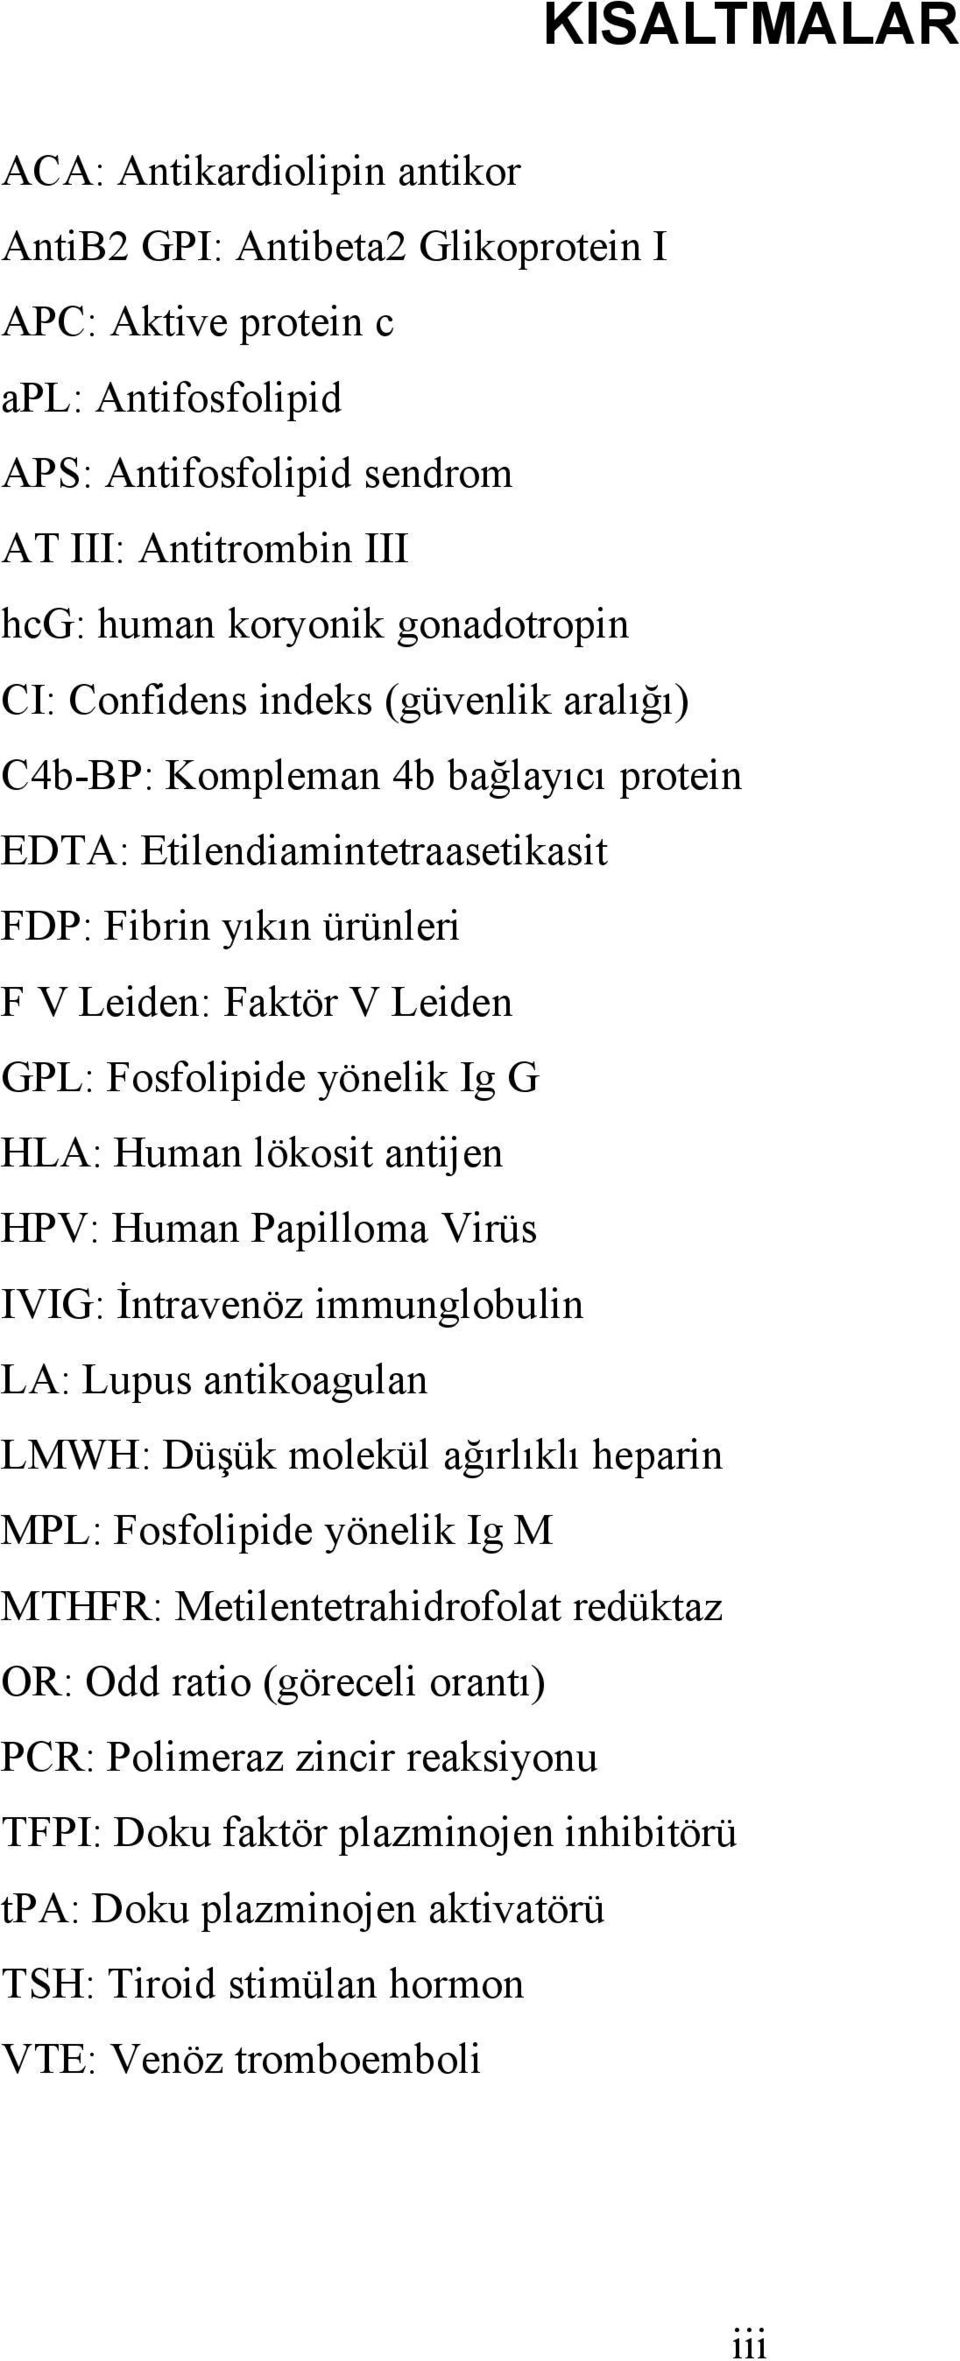 yönelik Ig G HLA: Human lökosit antijen HPV: Human Papilloma Virüs IVIG: İntravenöz immunglobulin LA: Lupus antikoagulan LMWH: Düşük molekül ağırlıklı heparin MPL: Fosfolipide yönelik Ig M MTHFR: